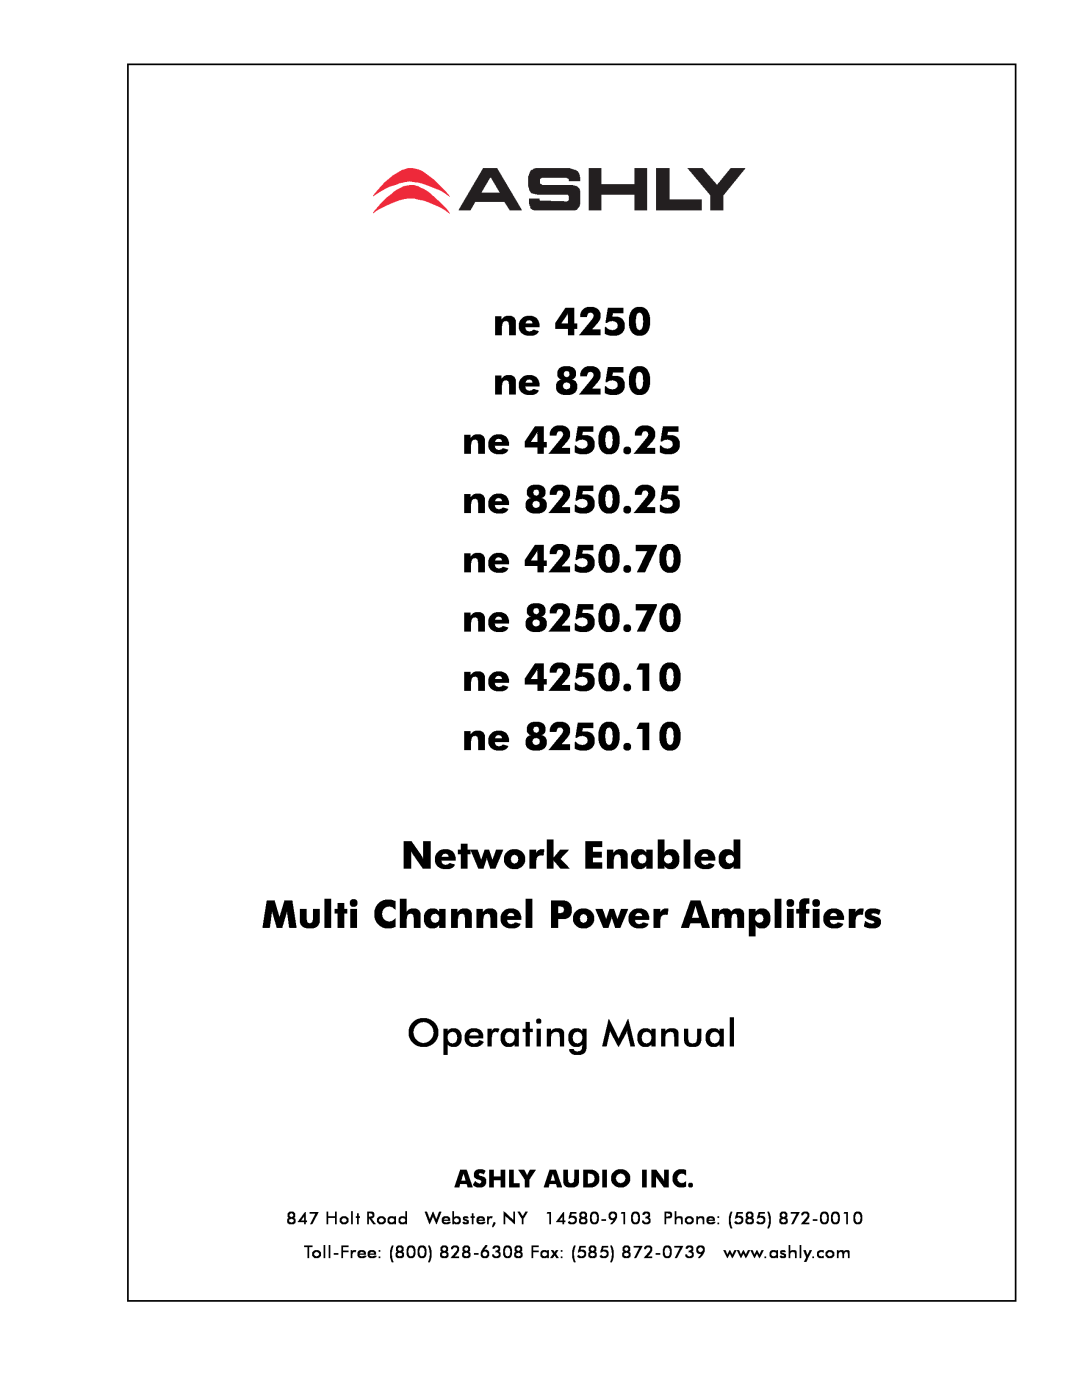 Ashly ne 8250, ne 4250.10p manual Network Enabled Multi Channel Power Amplifiers, Operating Manual, Ashly Audio Inc 